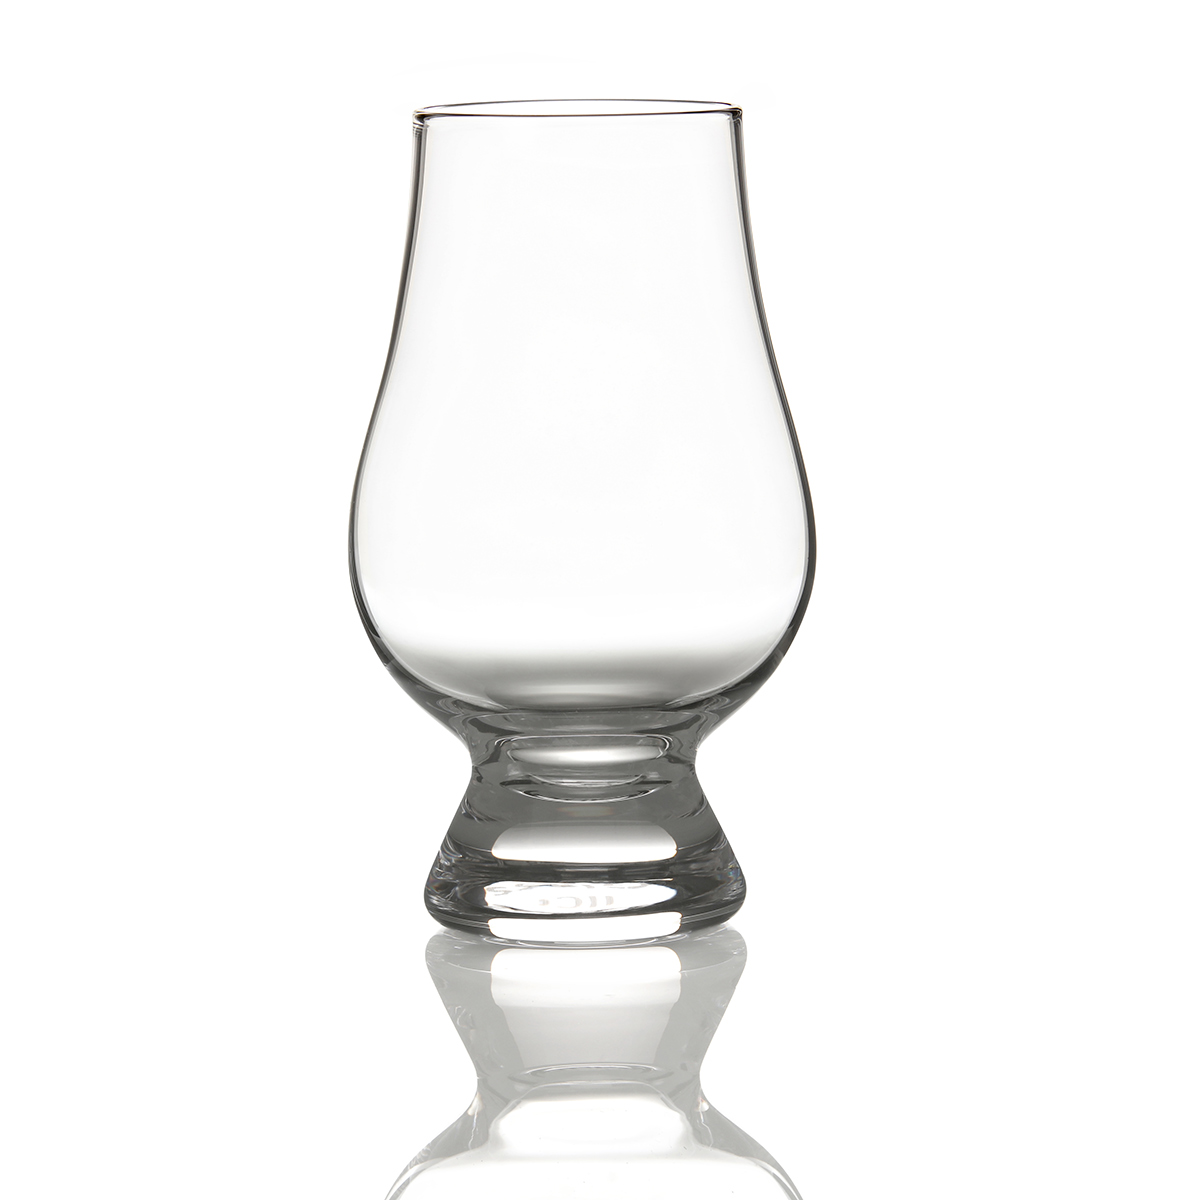 Glencairn Whisky Tasting Glas - Der Klassiker aus Schottland